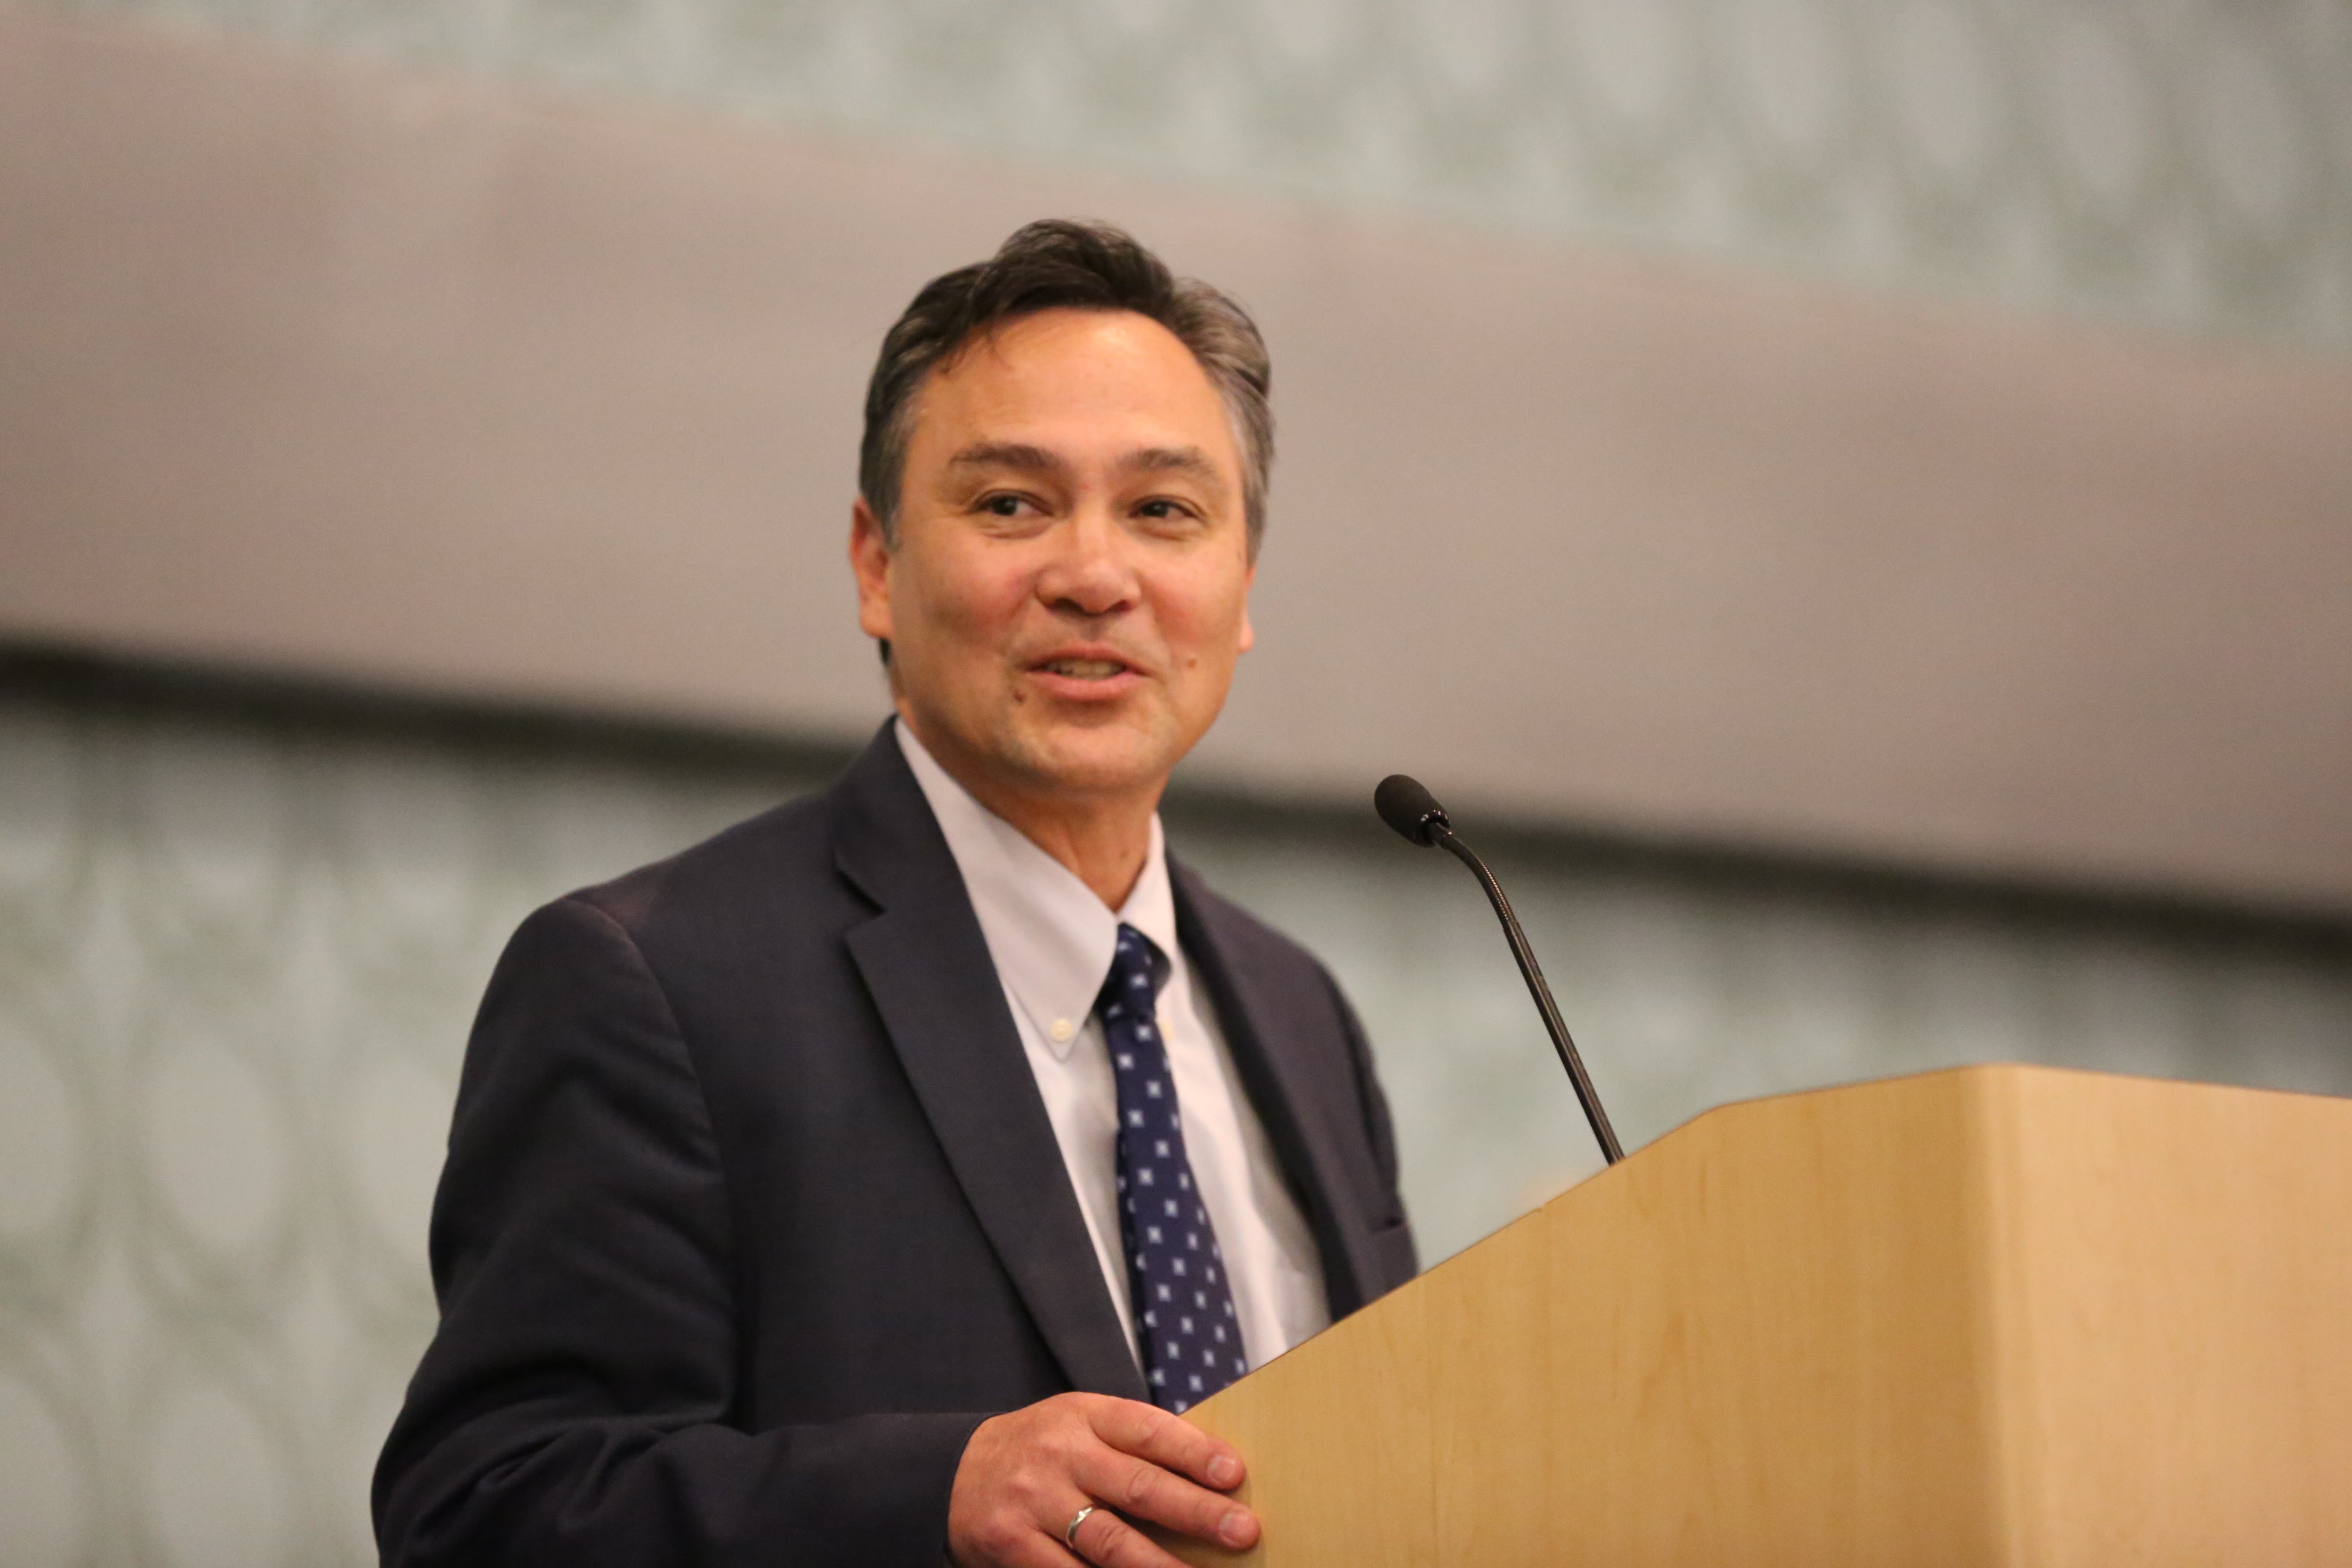 Administrative Director Martin Hoshino